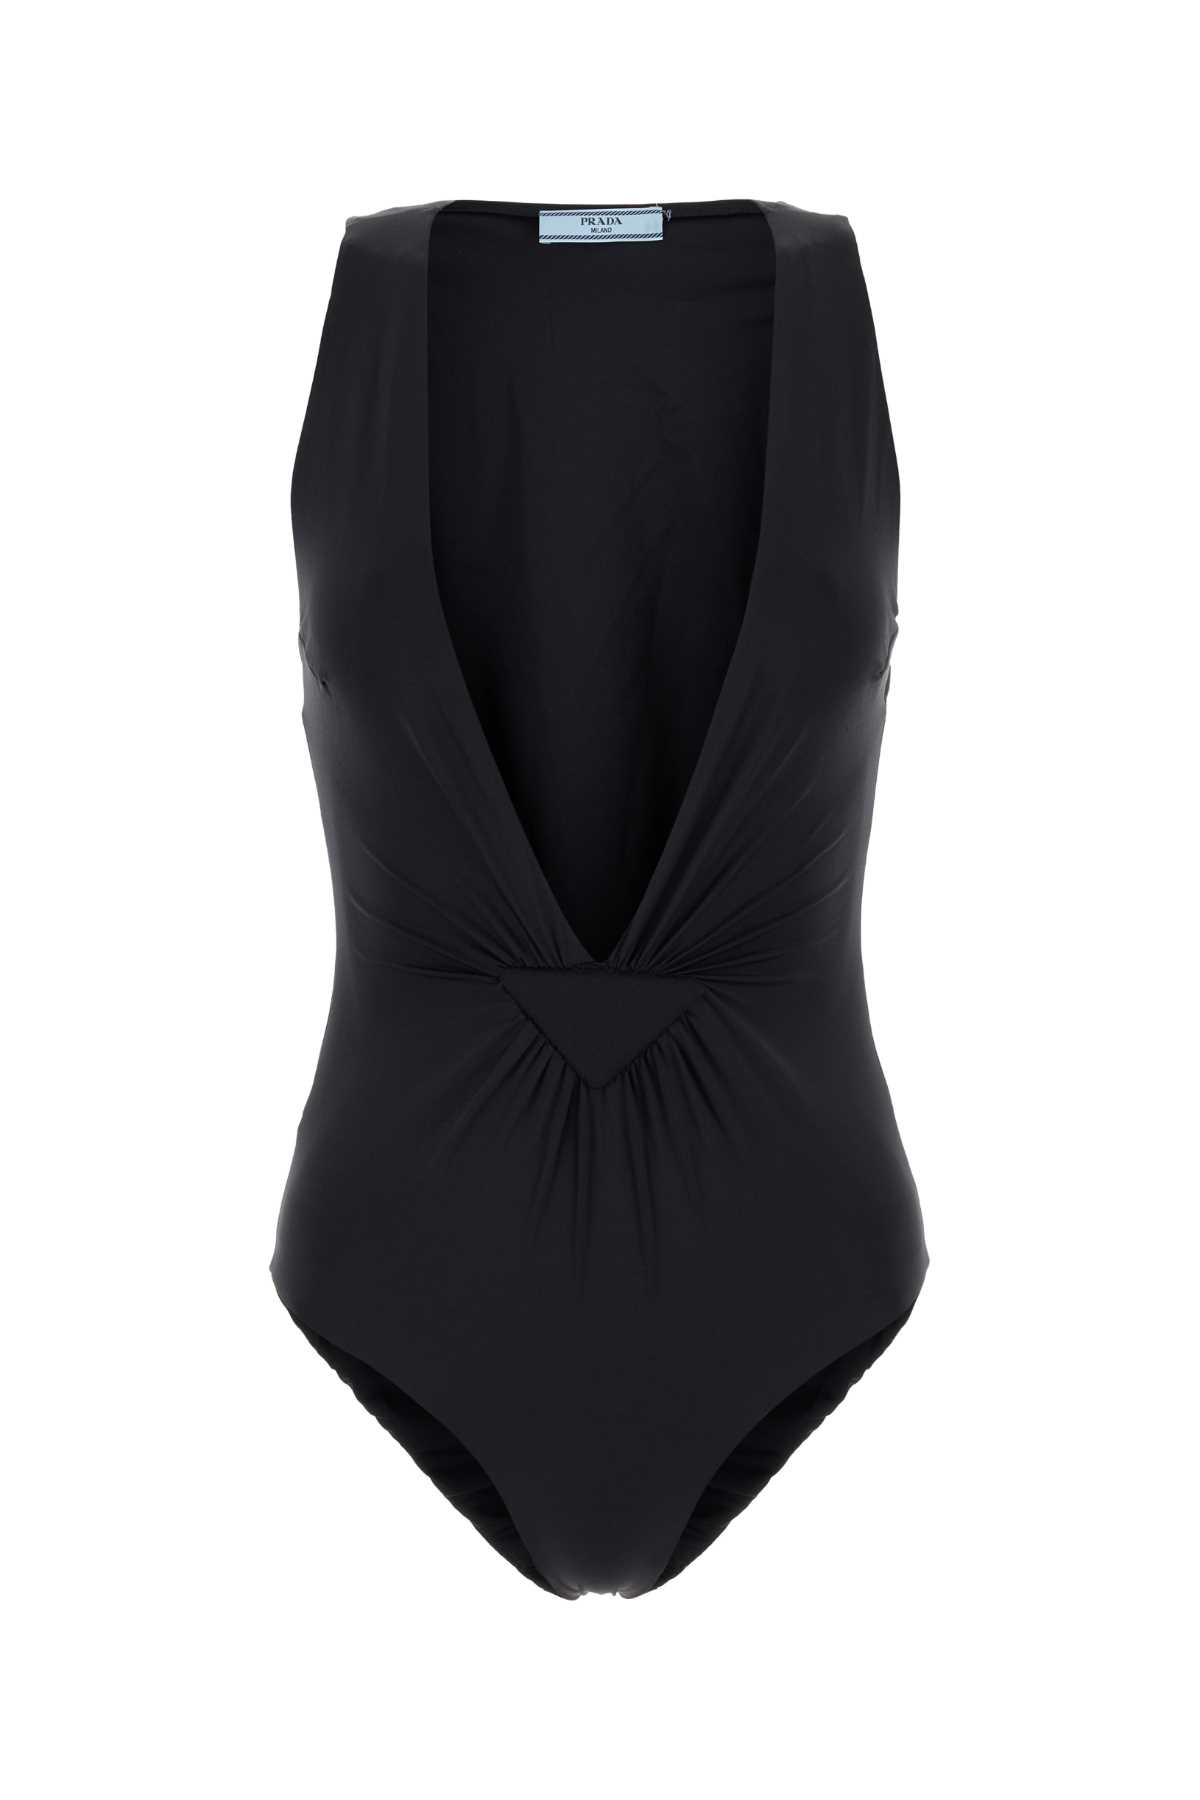 Prada Black Stretch Nylon Swimsuit